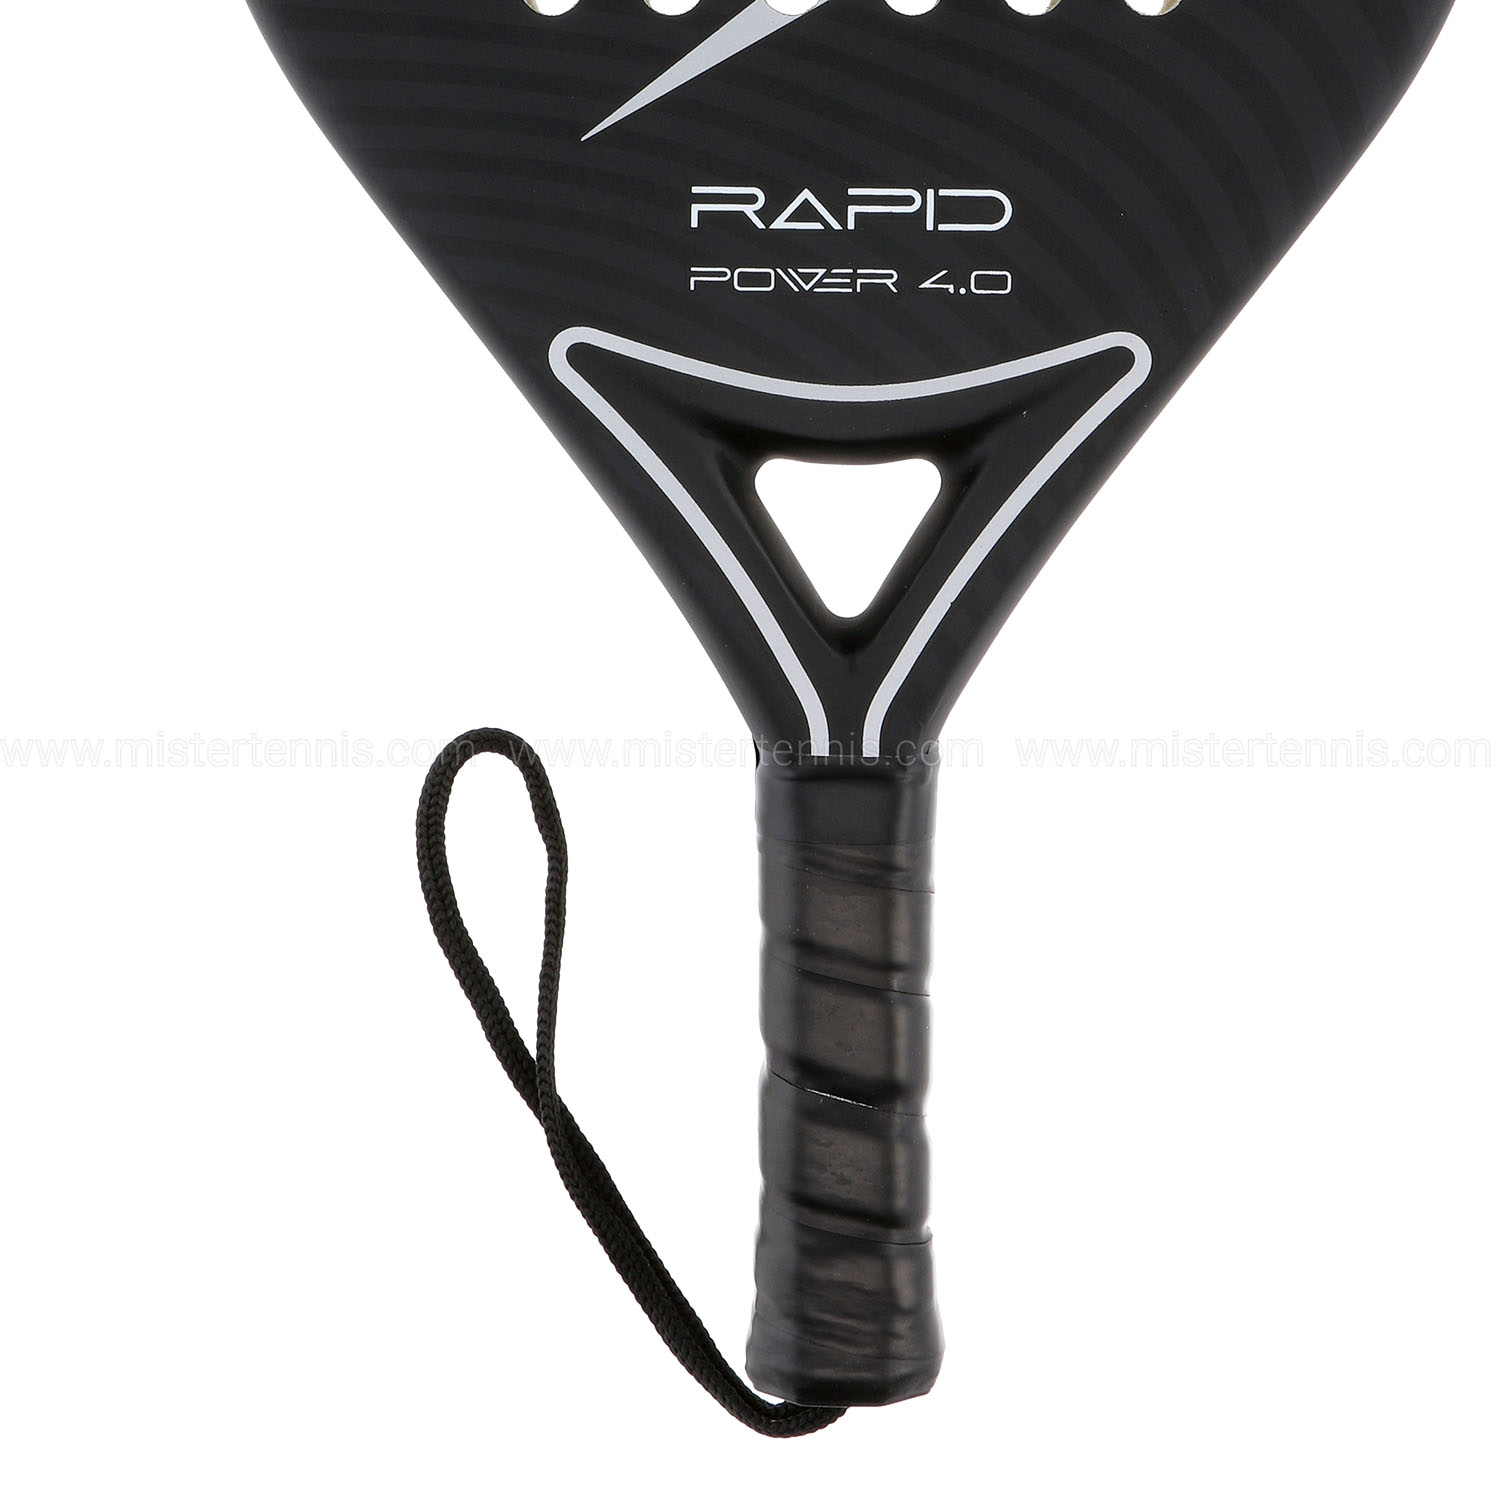 Dunlop Rapid Power 4.0 Padel - Black/Silver